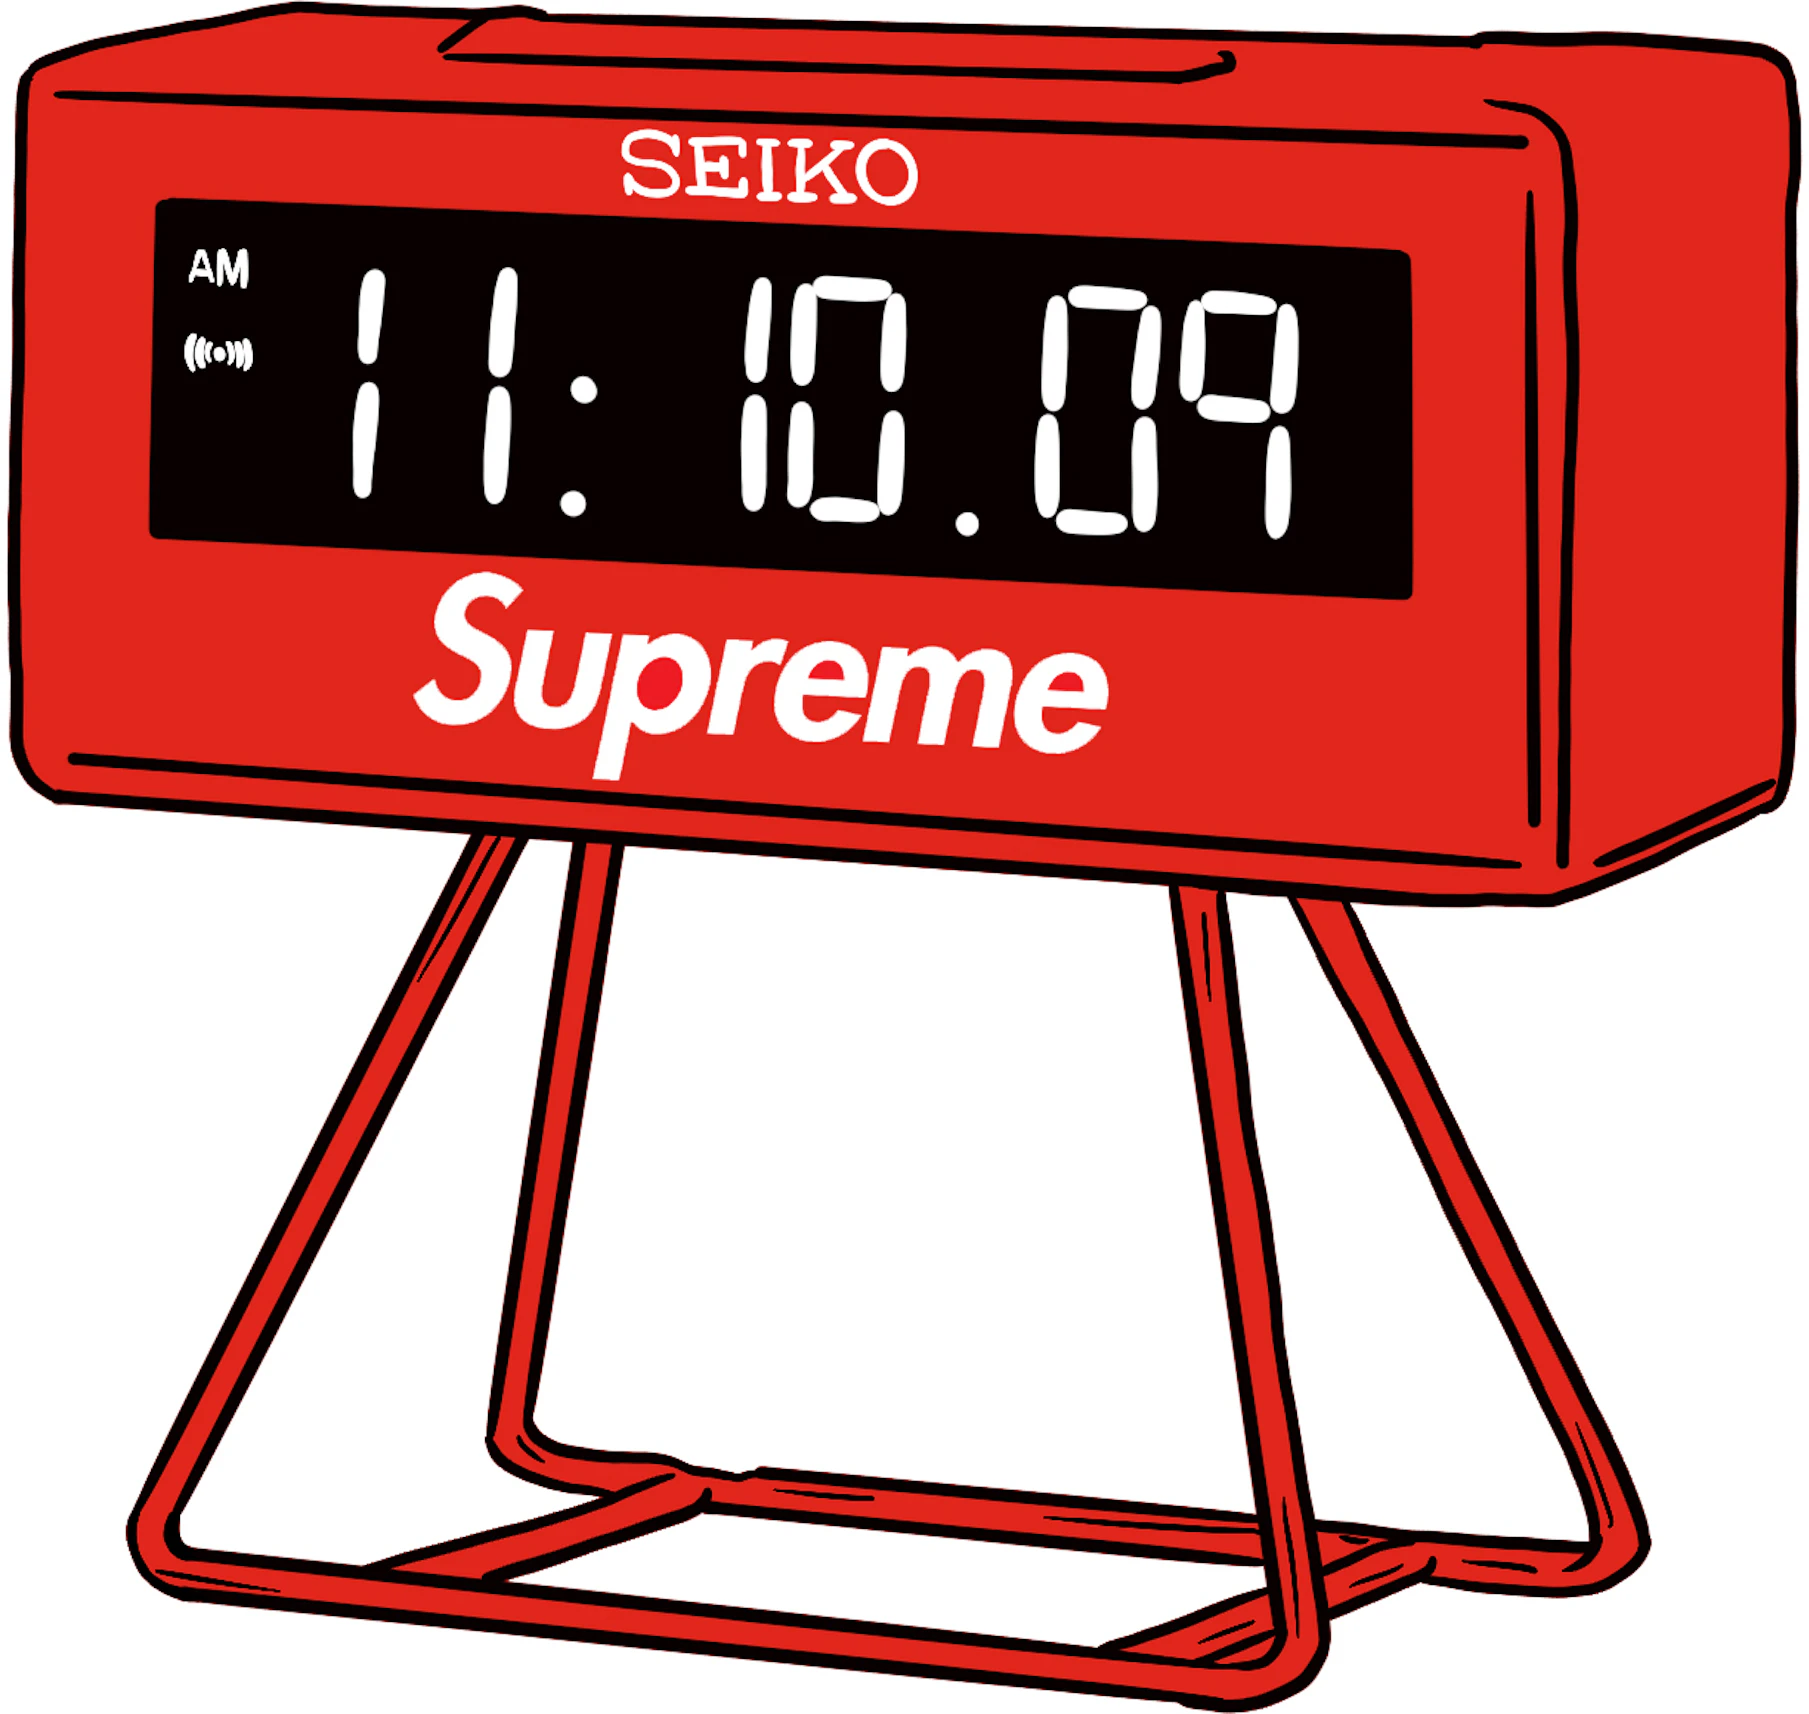 【 Red 】 Supreme / Seiko Marathon Clock